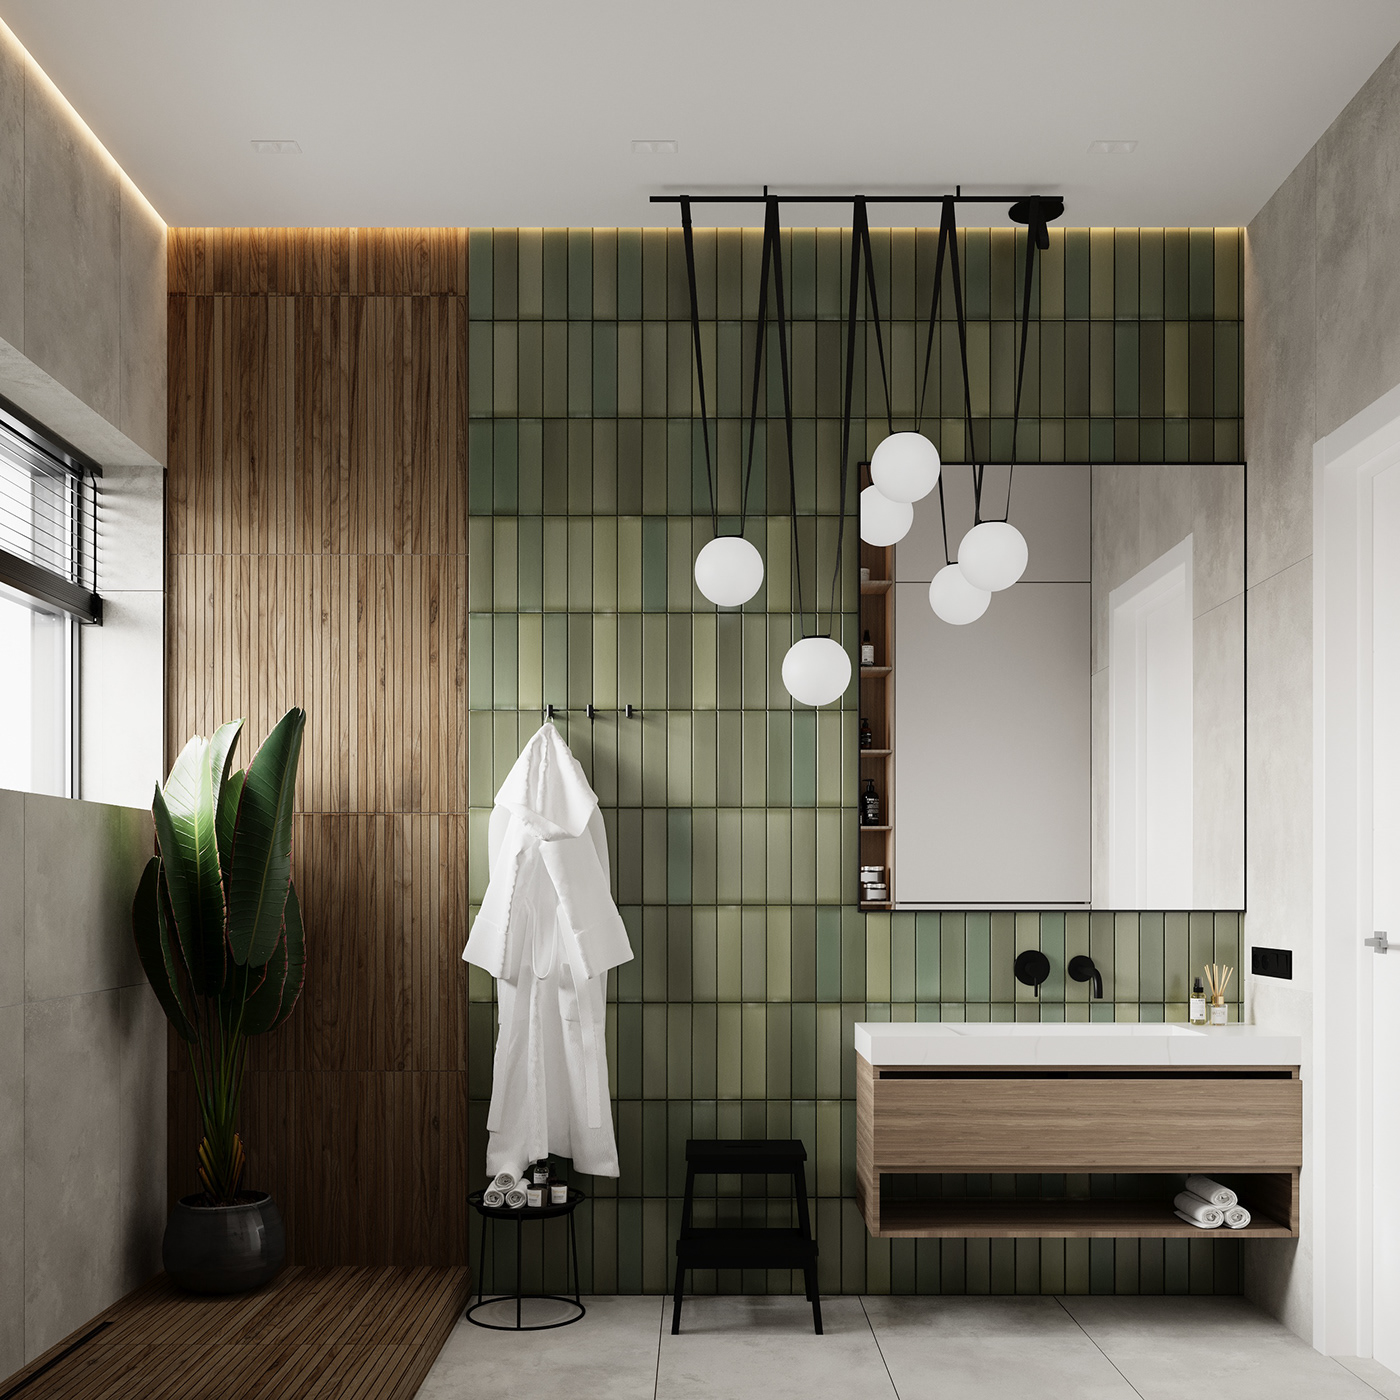 design designinterior bathroom 3dmax corona render  visualization interior design  Render Interior